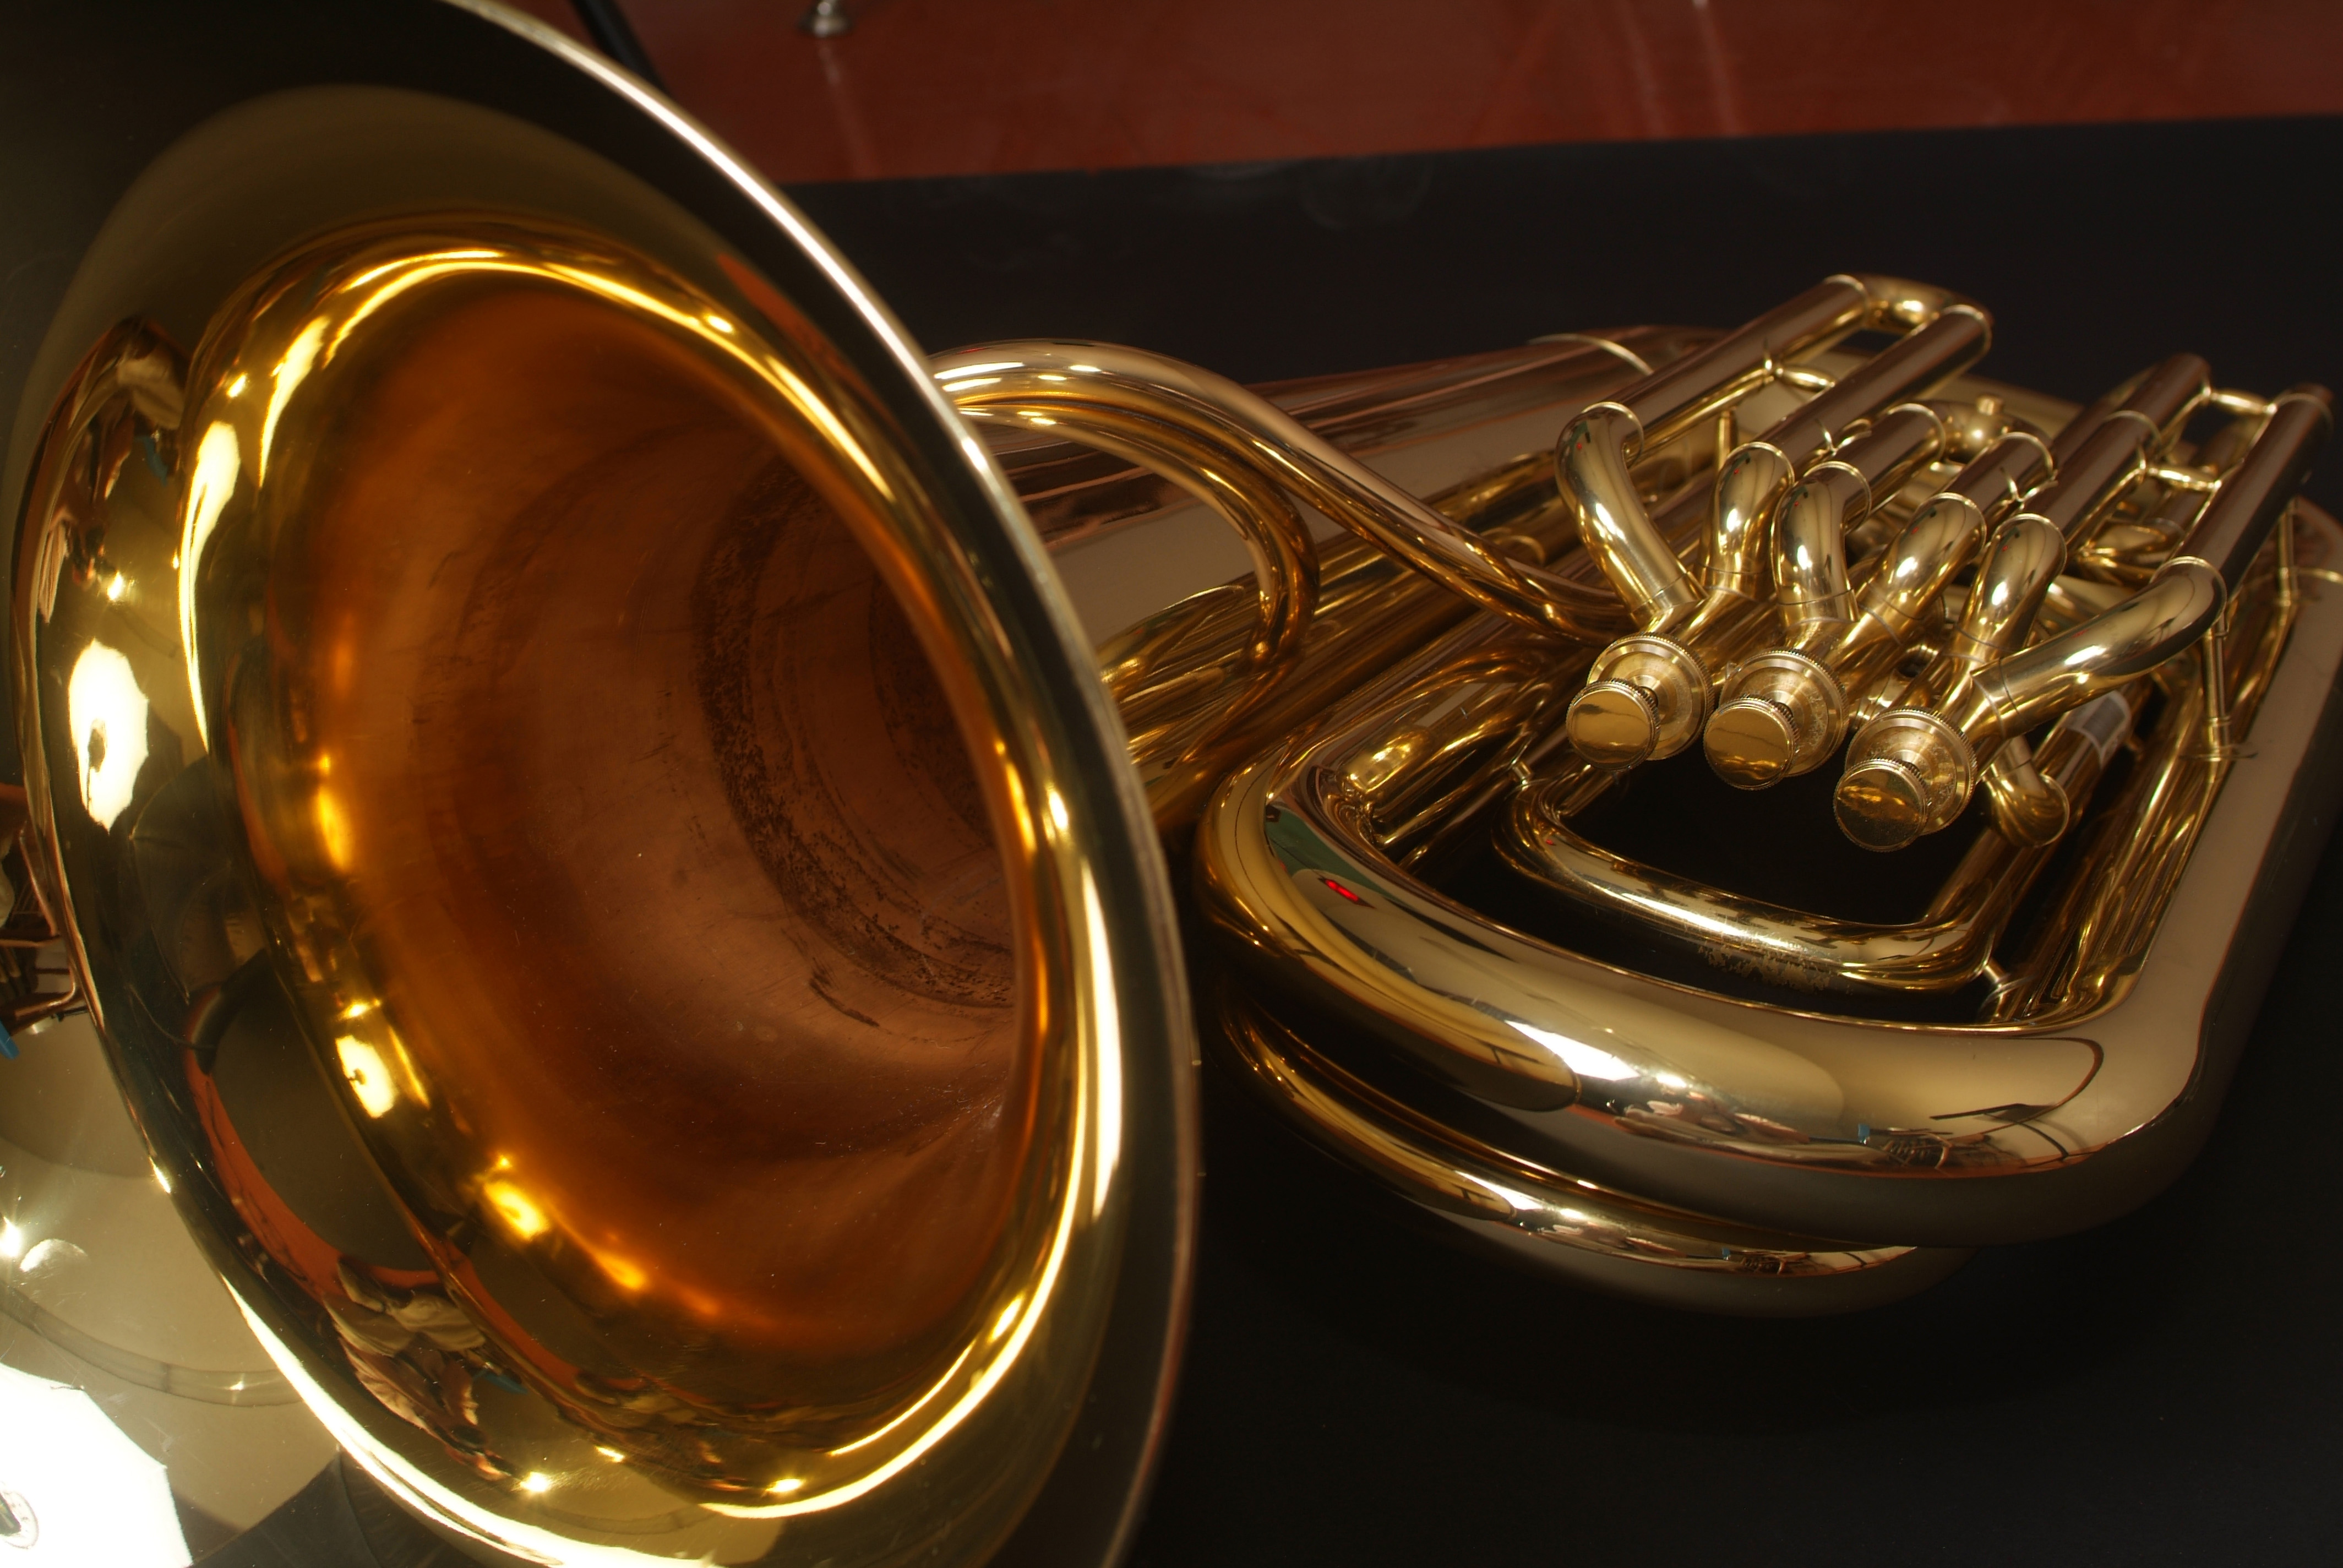 Stock photo of a tuba